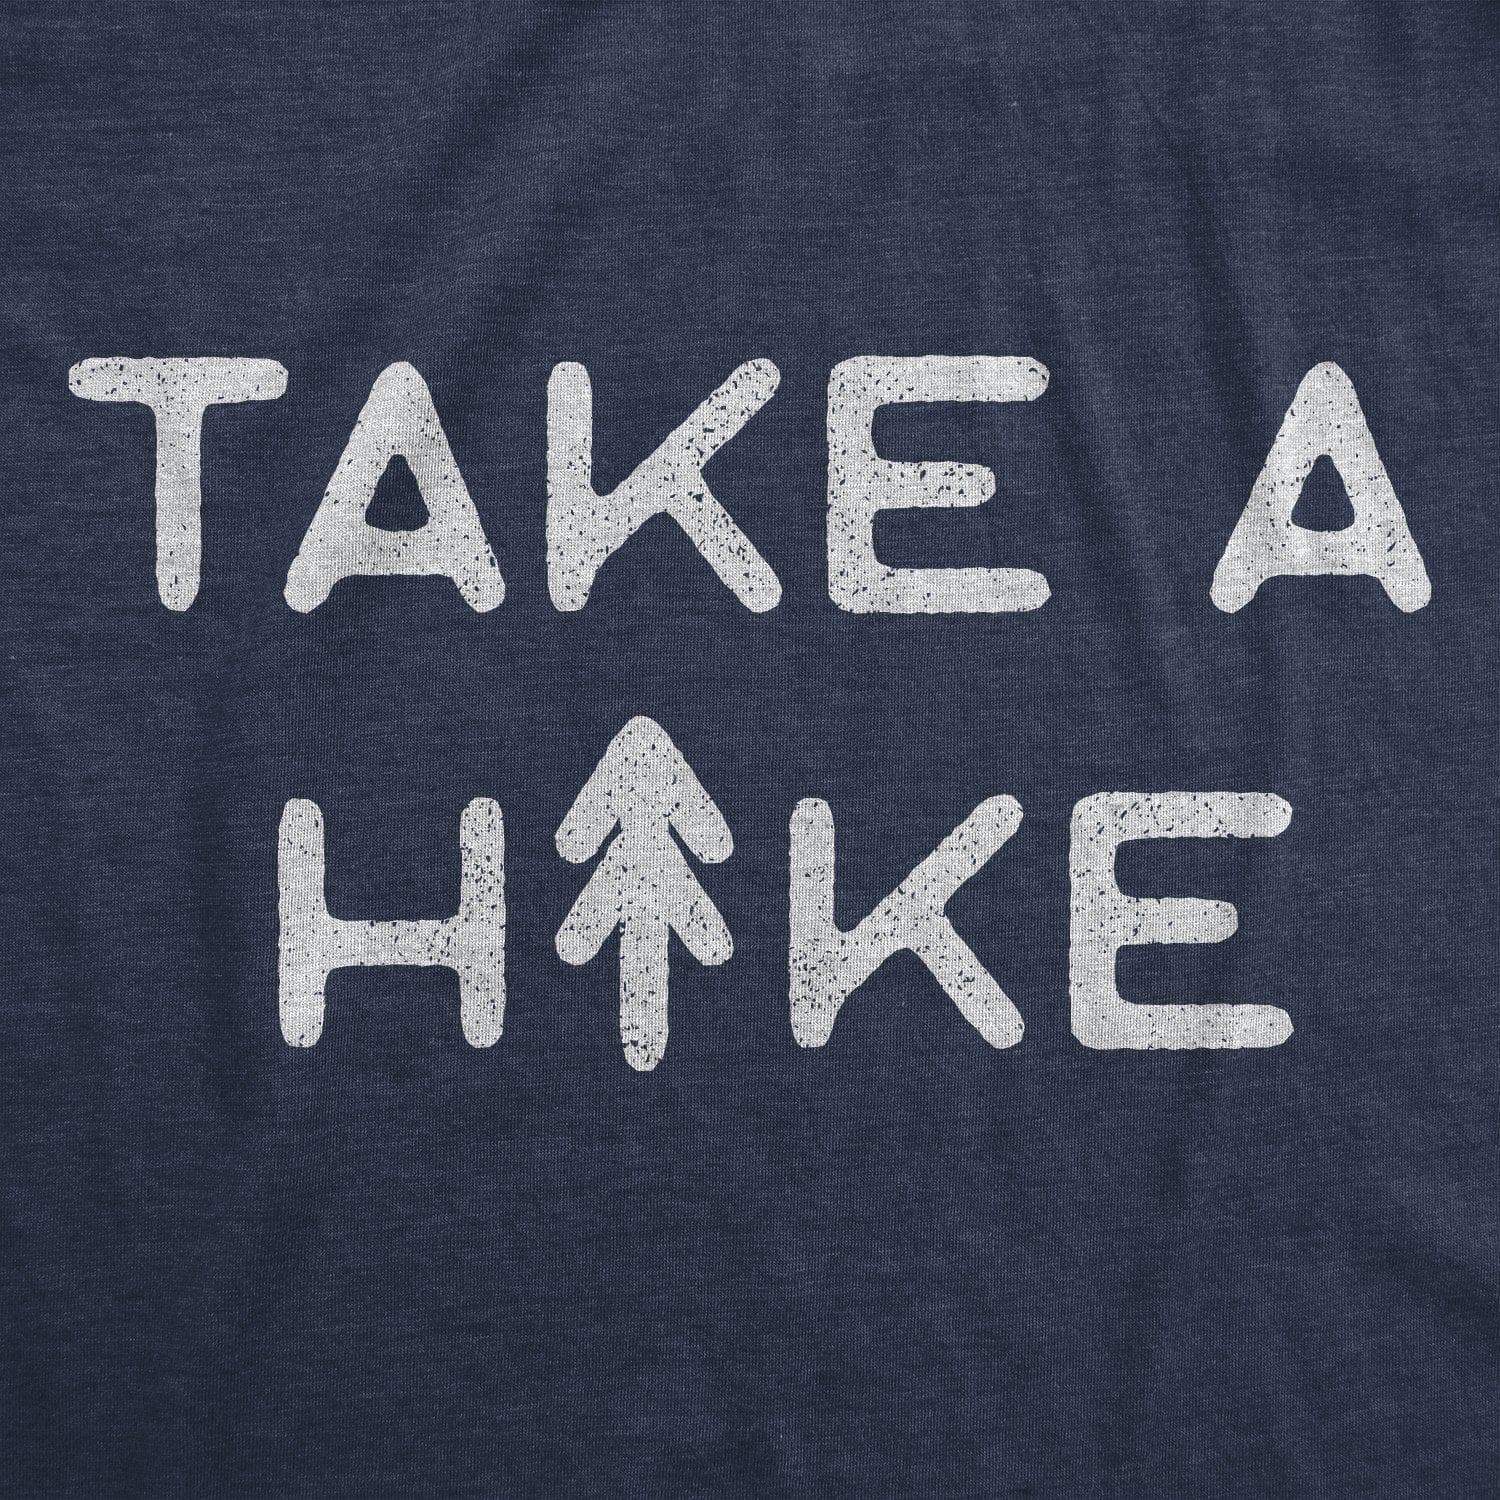 Take A Hike Men's Tshirt - Crazy Dog T-Shirts